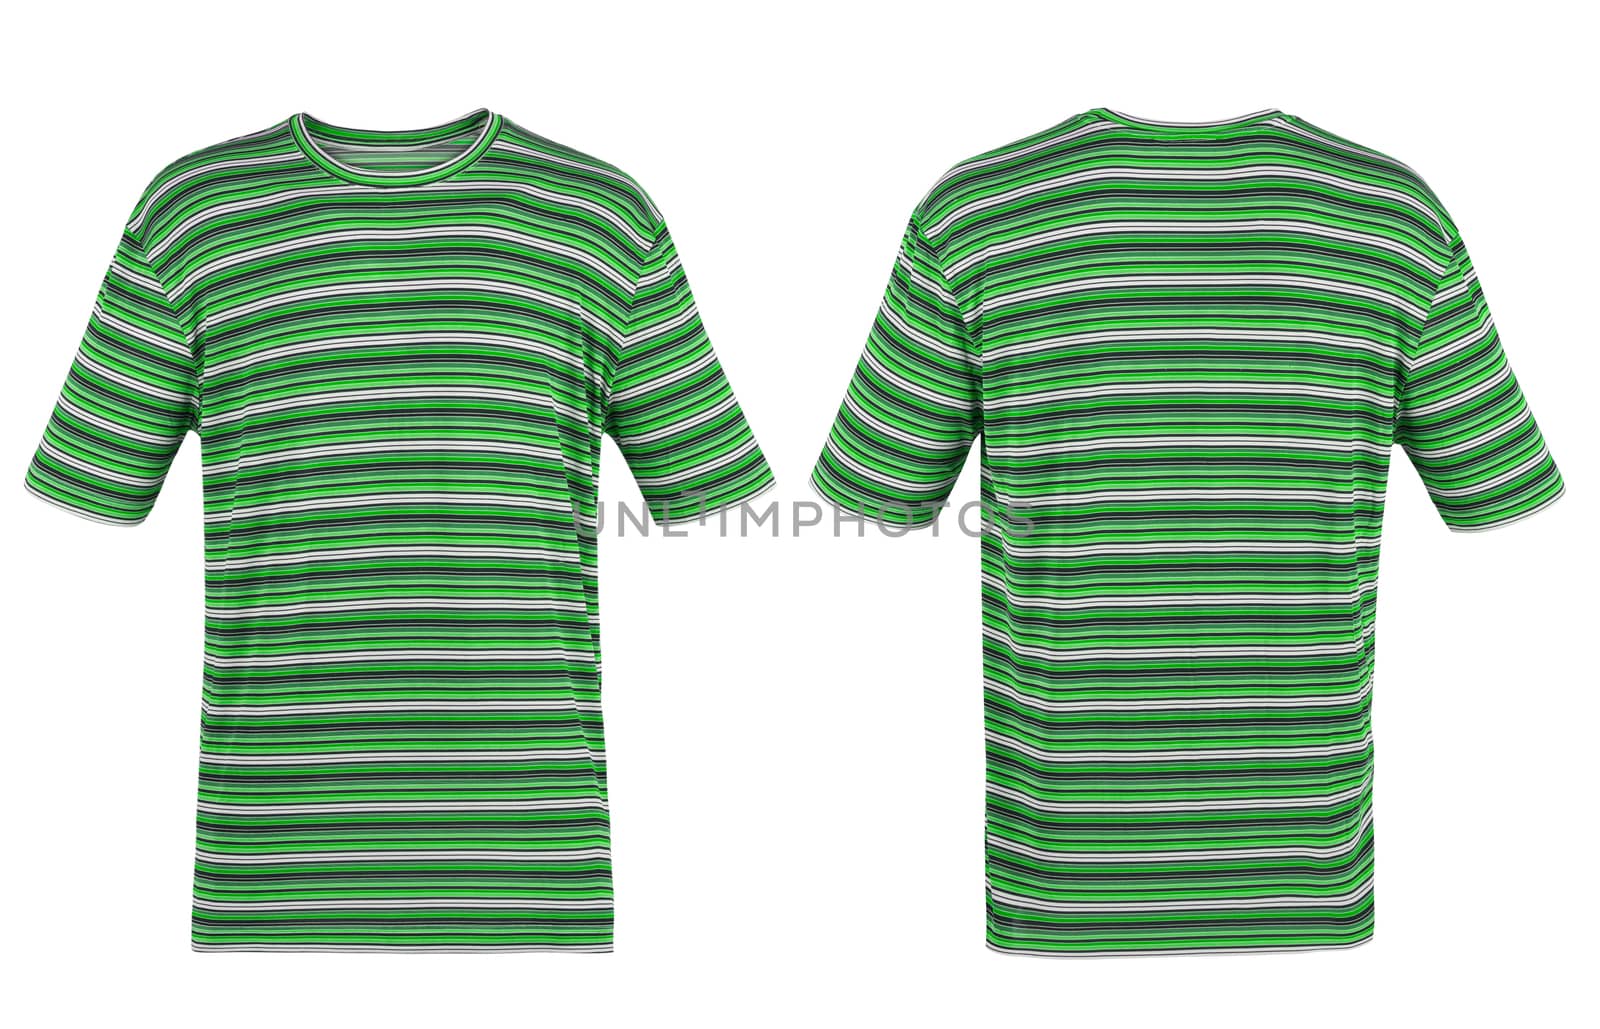 green striped t-shirt on white